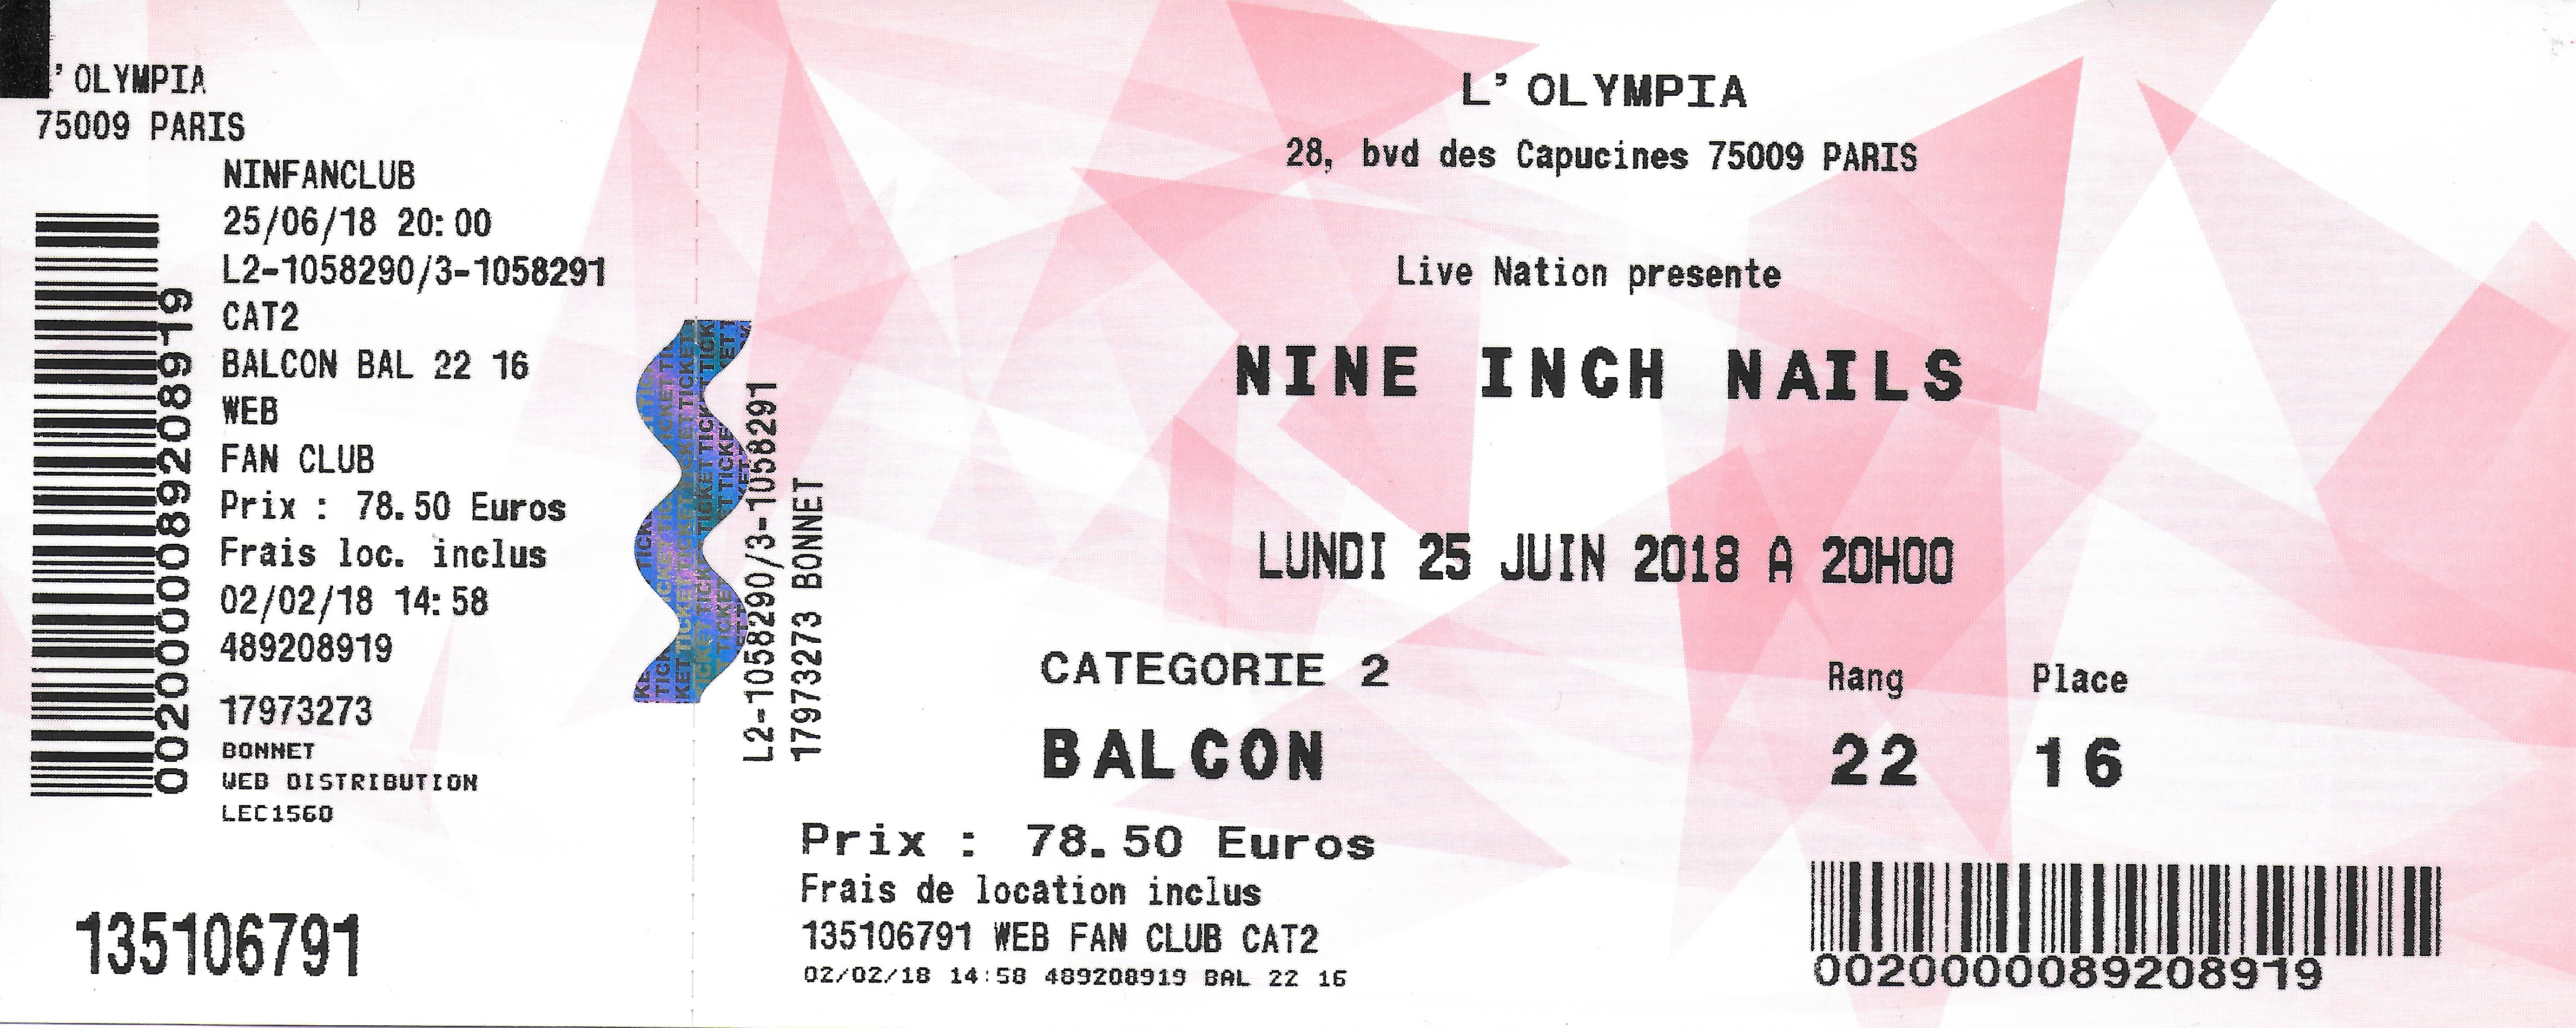 2018/06/25 Ticket